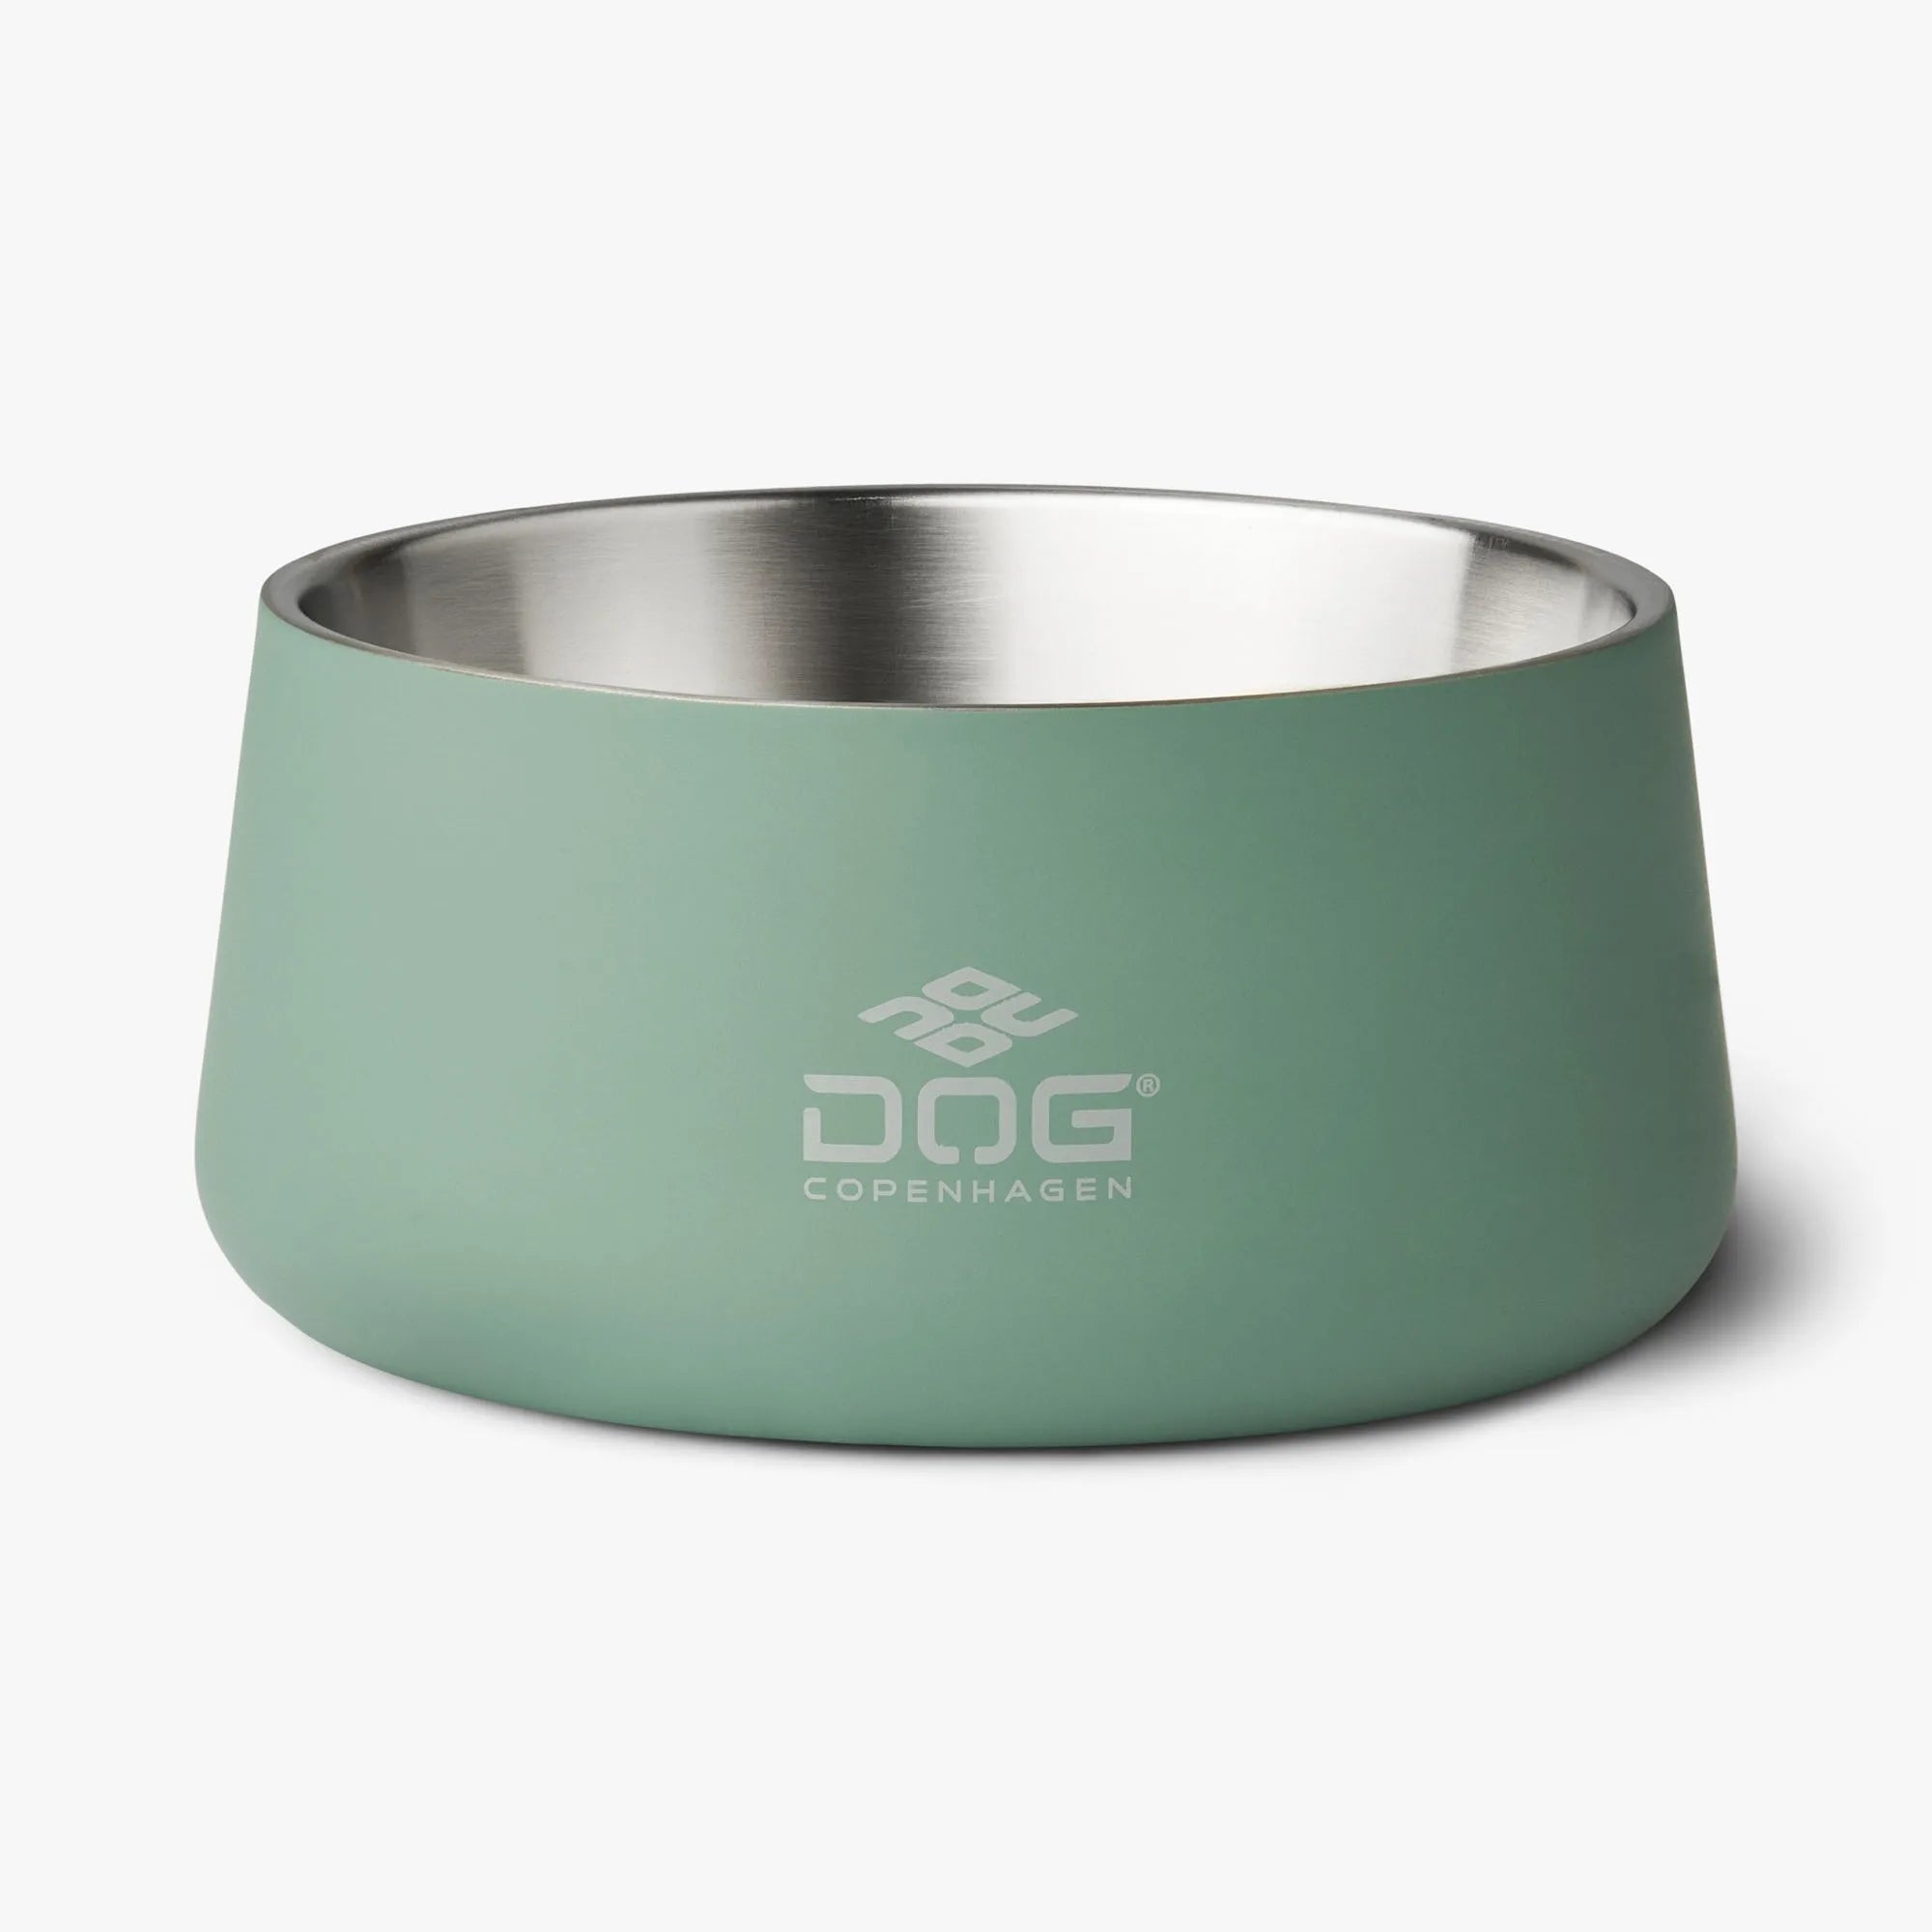 Se Dog copenhagen - DOG Copenhagen Vega Skål, Farve : Mintgrøn - 1400ML - Pet Bowls, Feeders & Waterers hos Petpower.dk